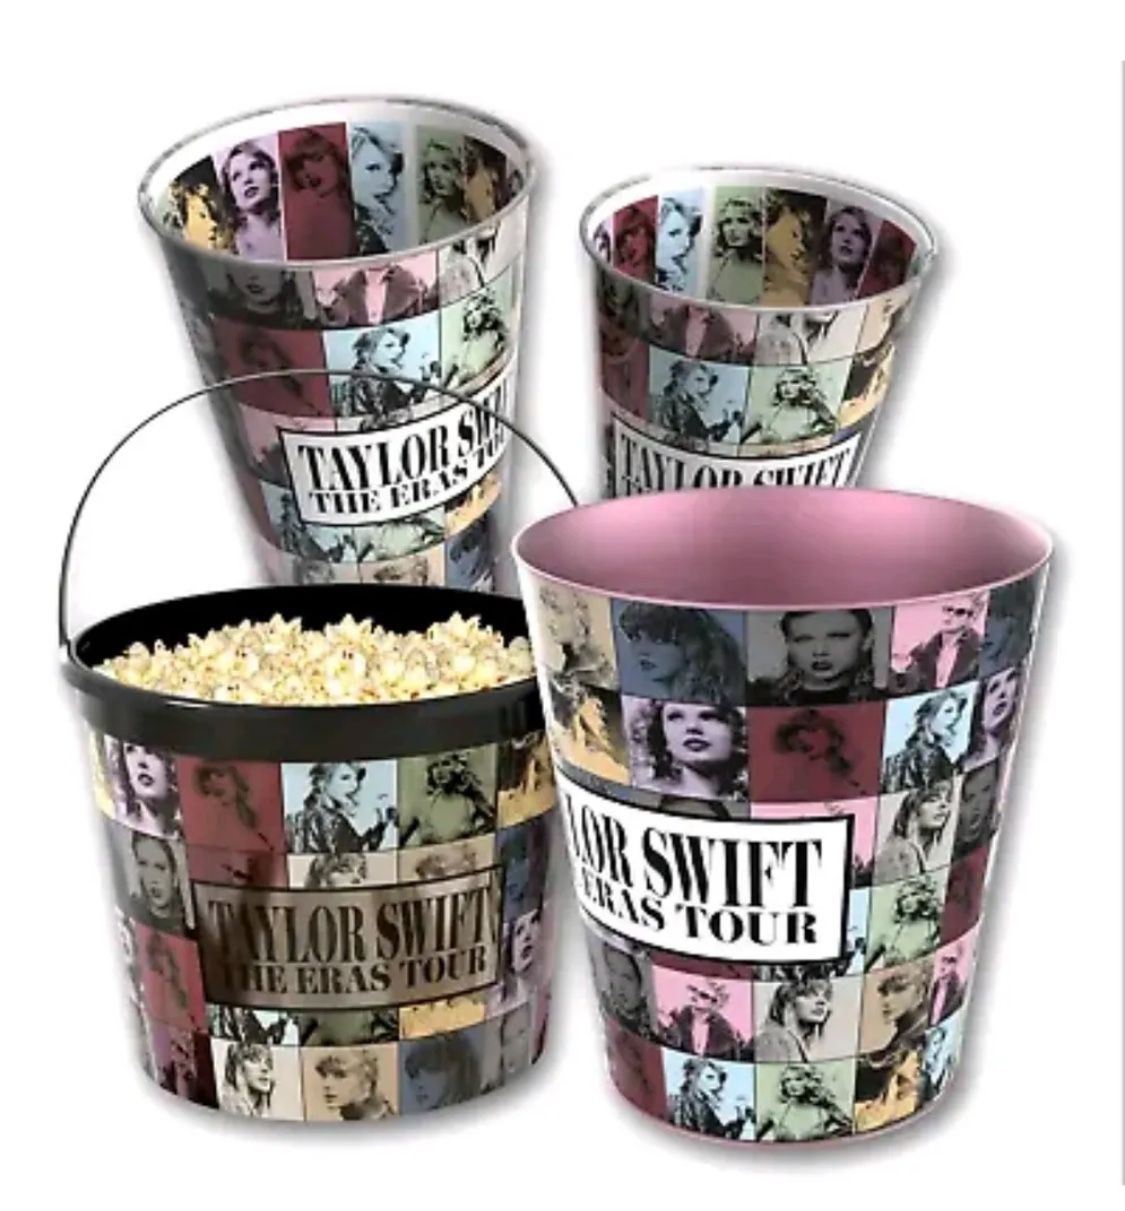 Taylor Swift The Eras Tour AMC Movie Bundle Embossed Tin Popcorn Tub Cups